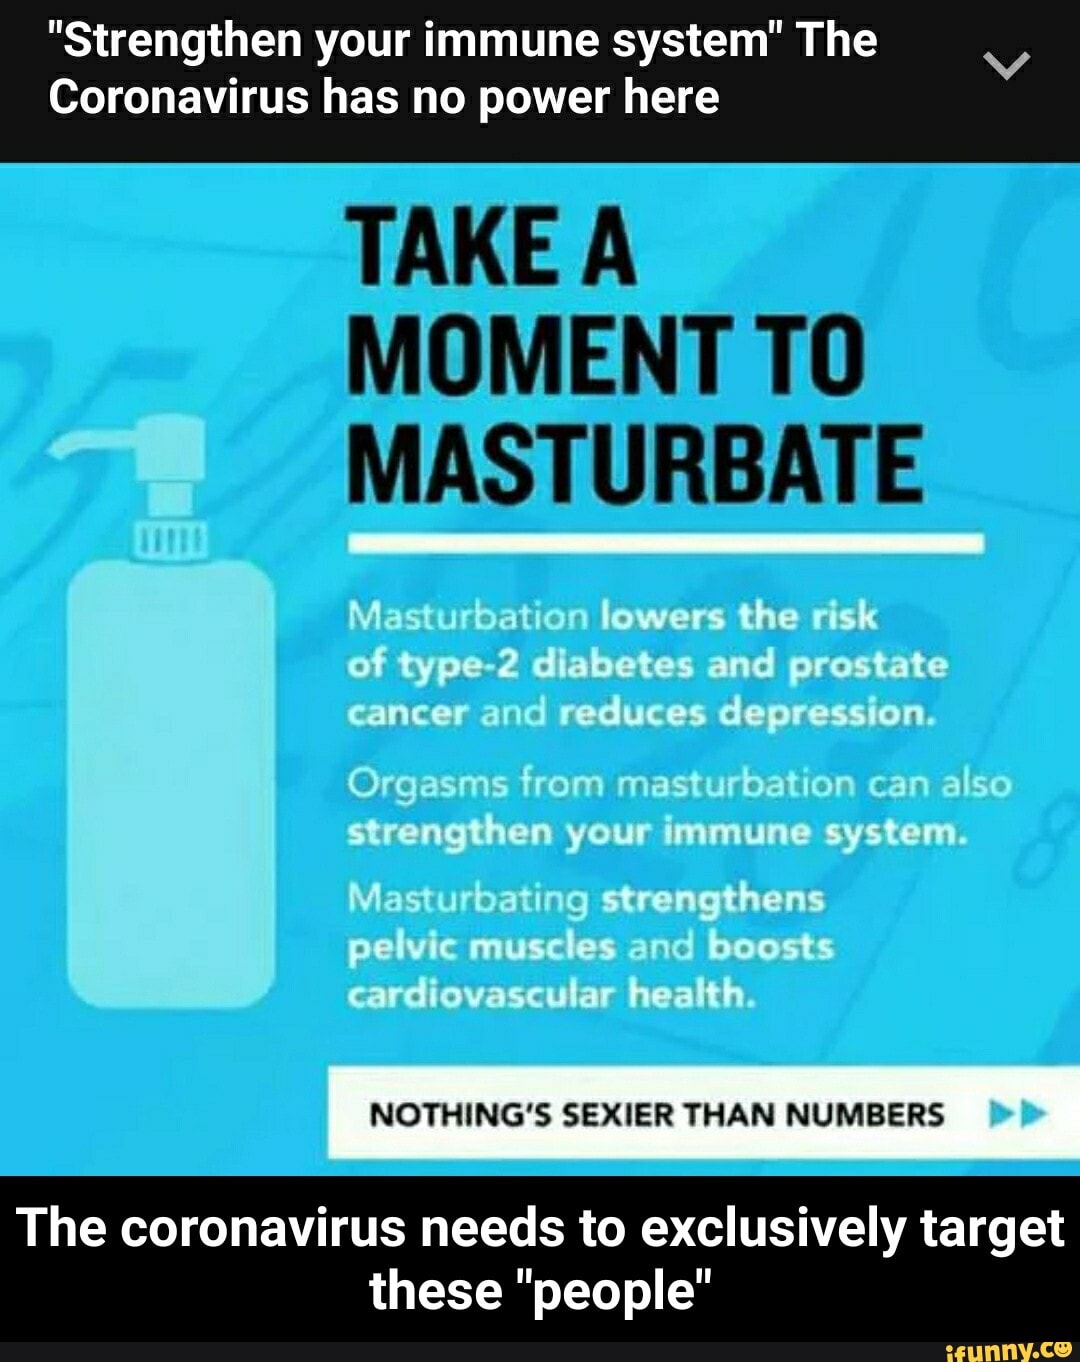 Ways a guy can masturbate